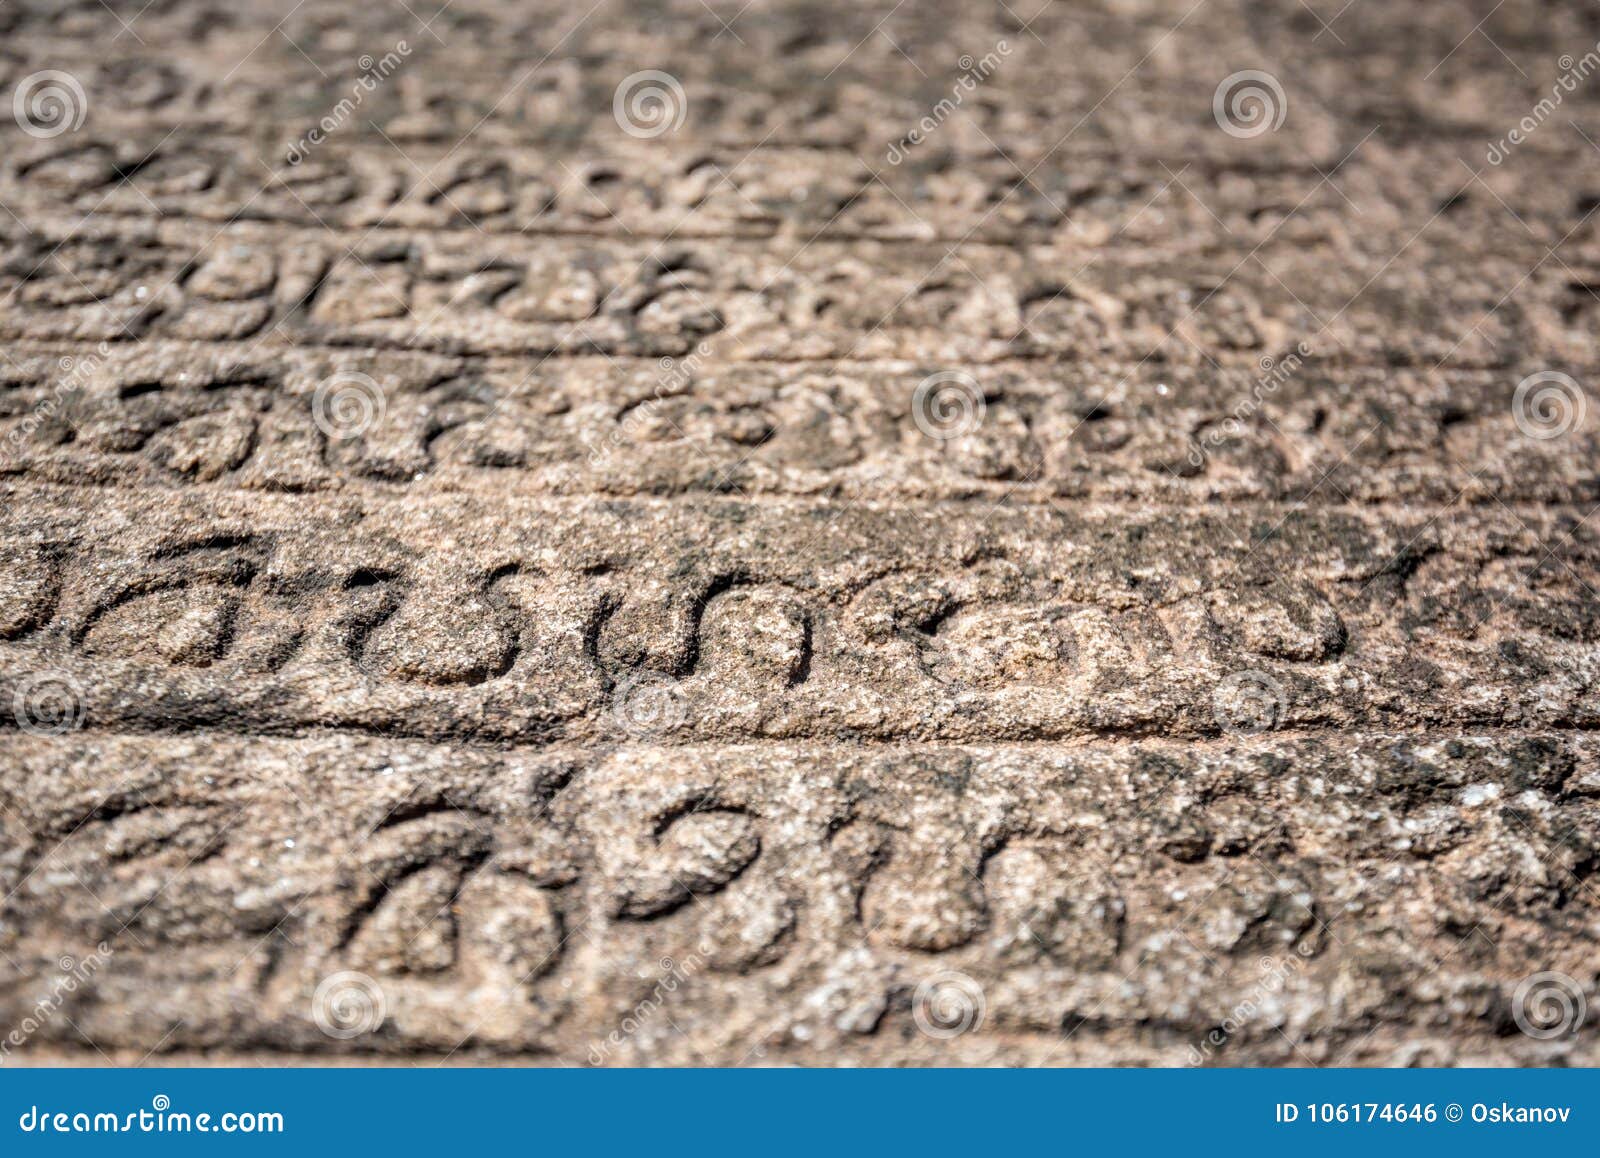 ancient sinhalese scripts